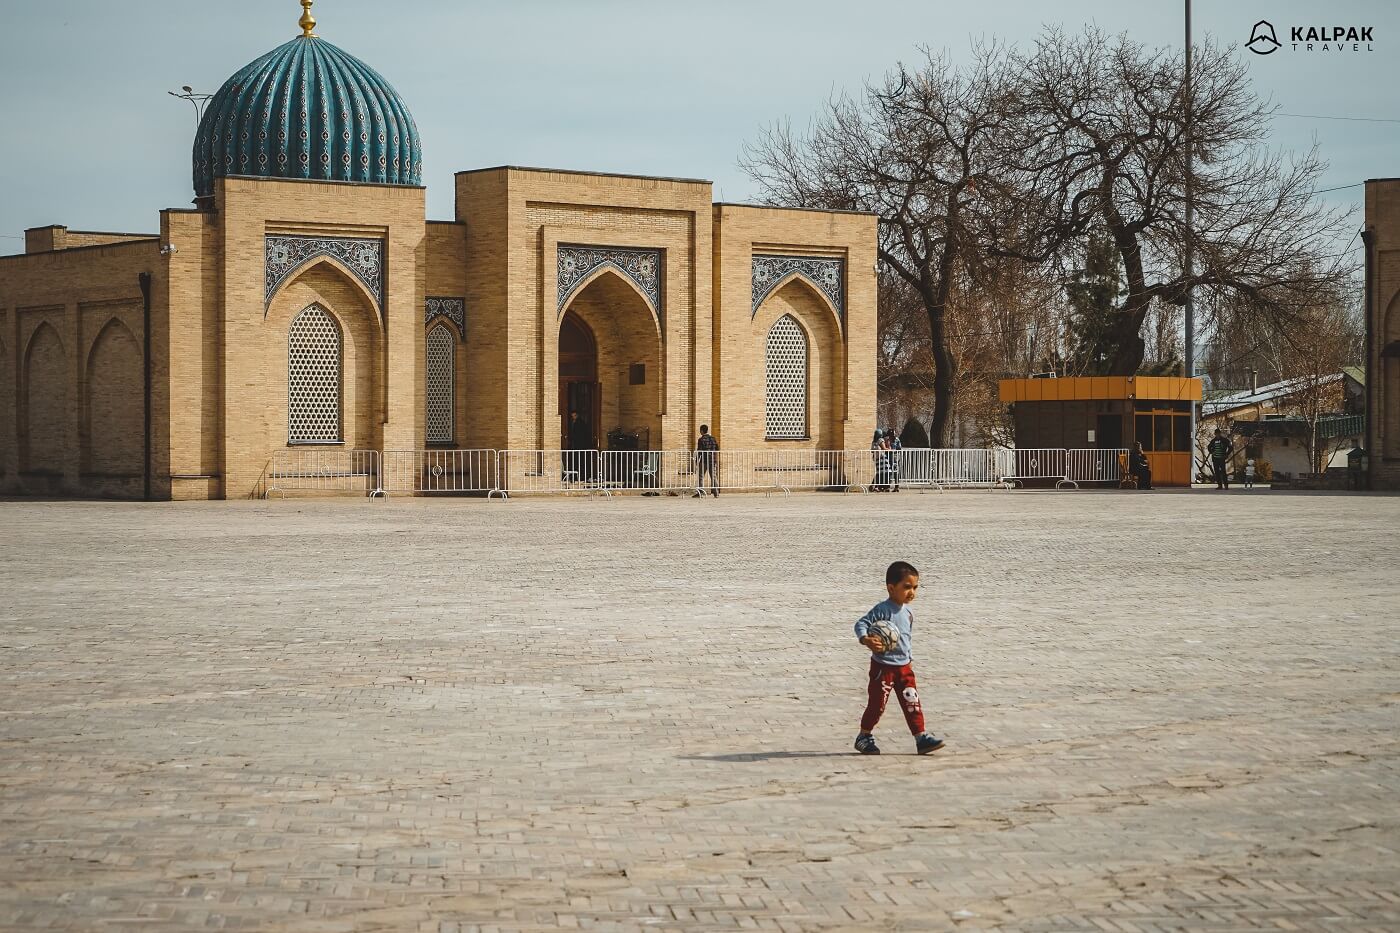 Tashkent Muy Muborak building with oldest Koran inside